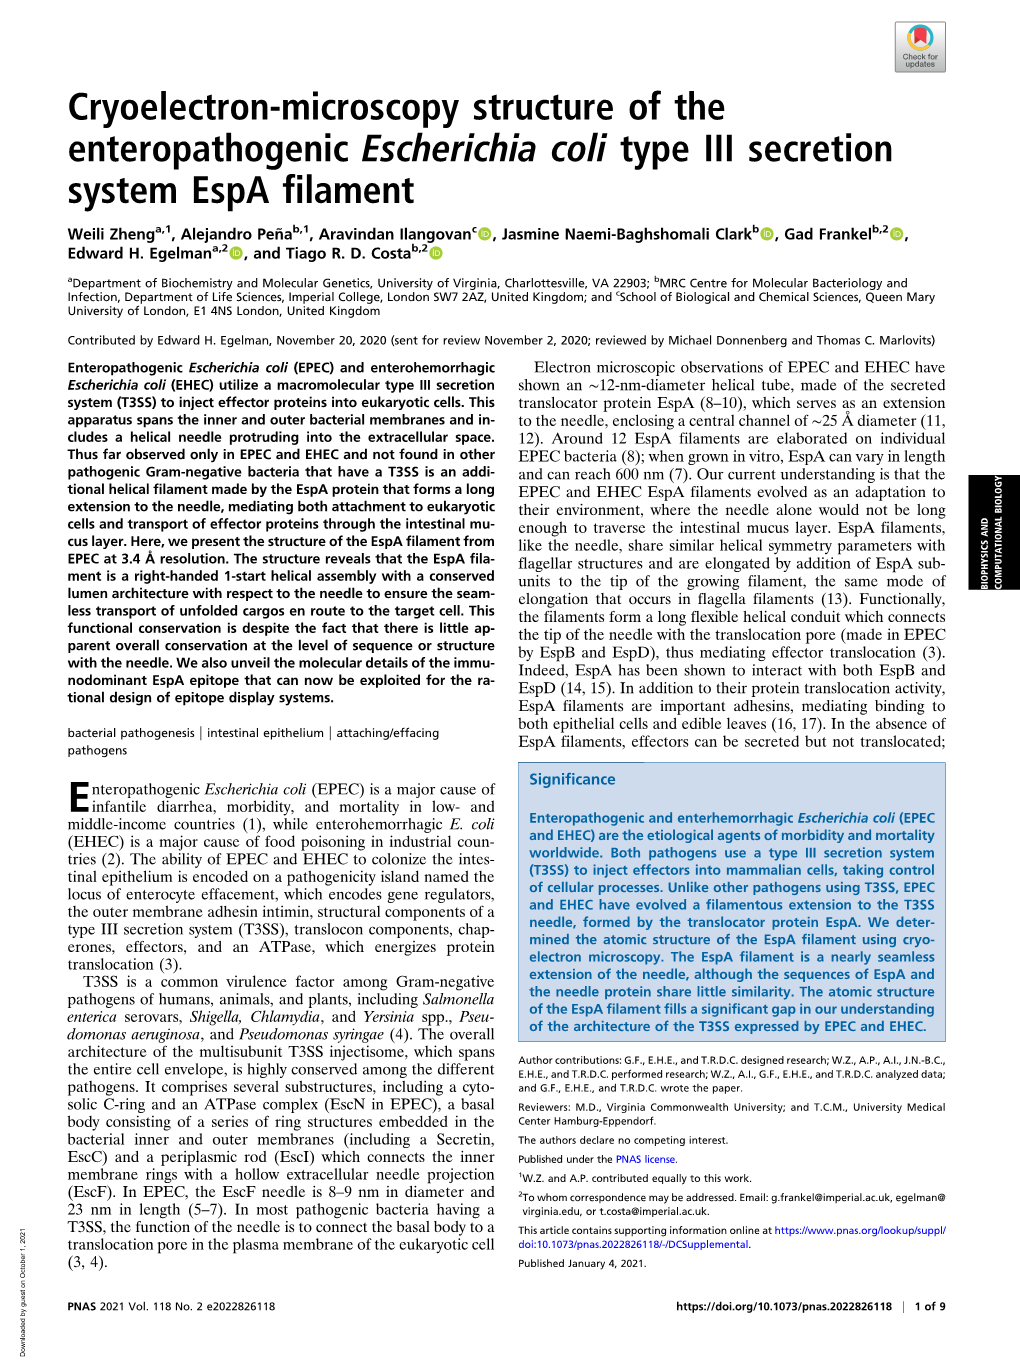 Cryoelectron-Microscopy Structure of the Enteropathogenic Escherichia Coli Type III Secretion System Espa Filament